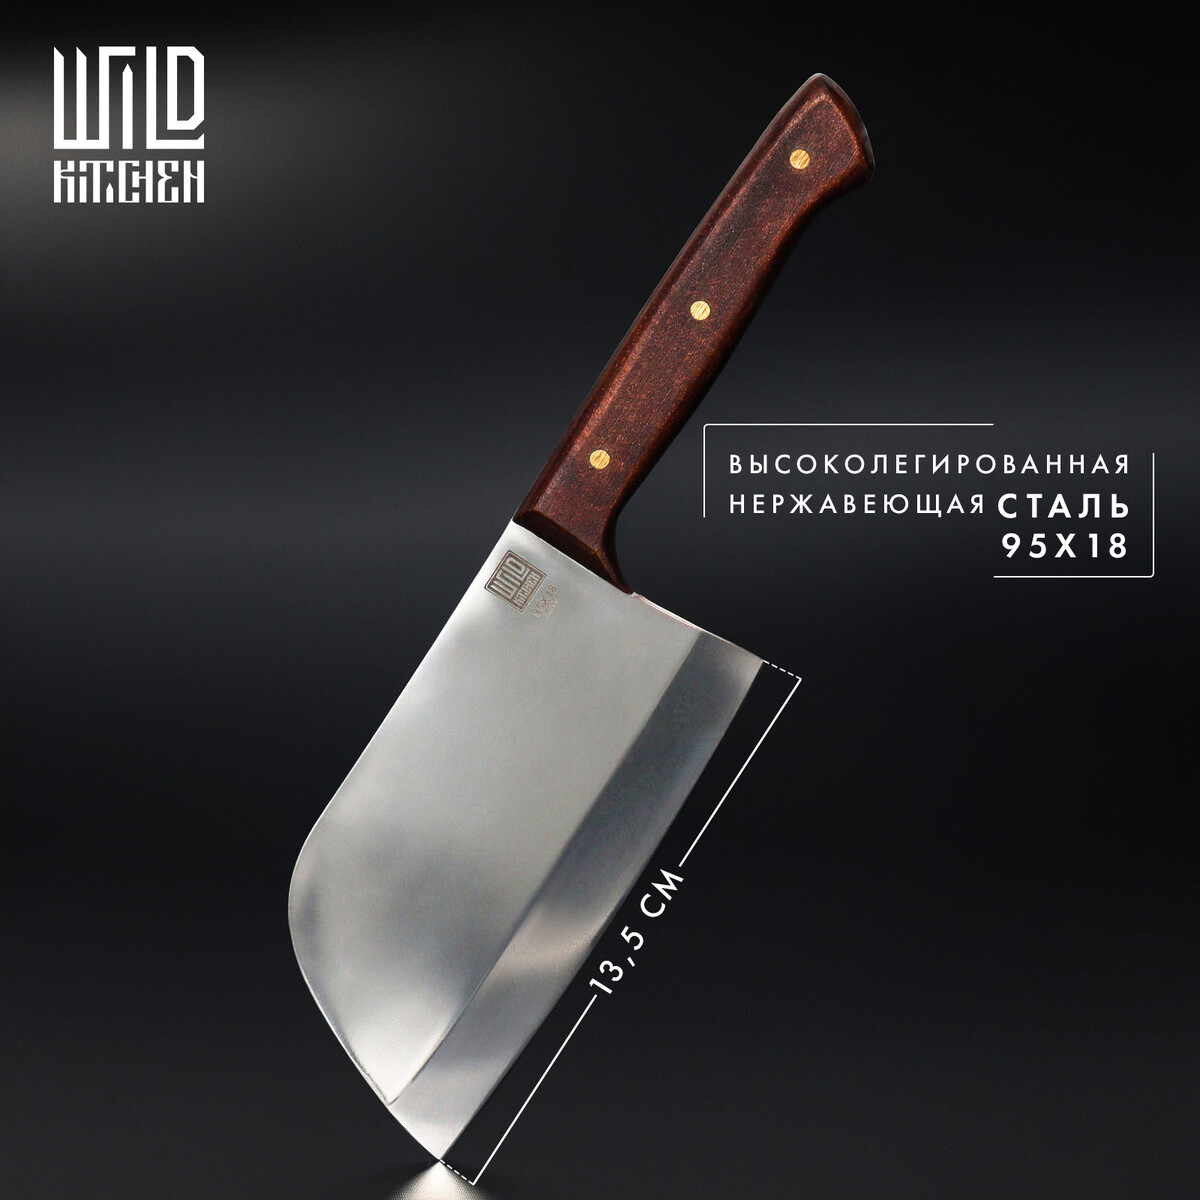 Нож - топорик малый wild kitchen, сталь 95×18, лезвие 13,5 см